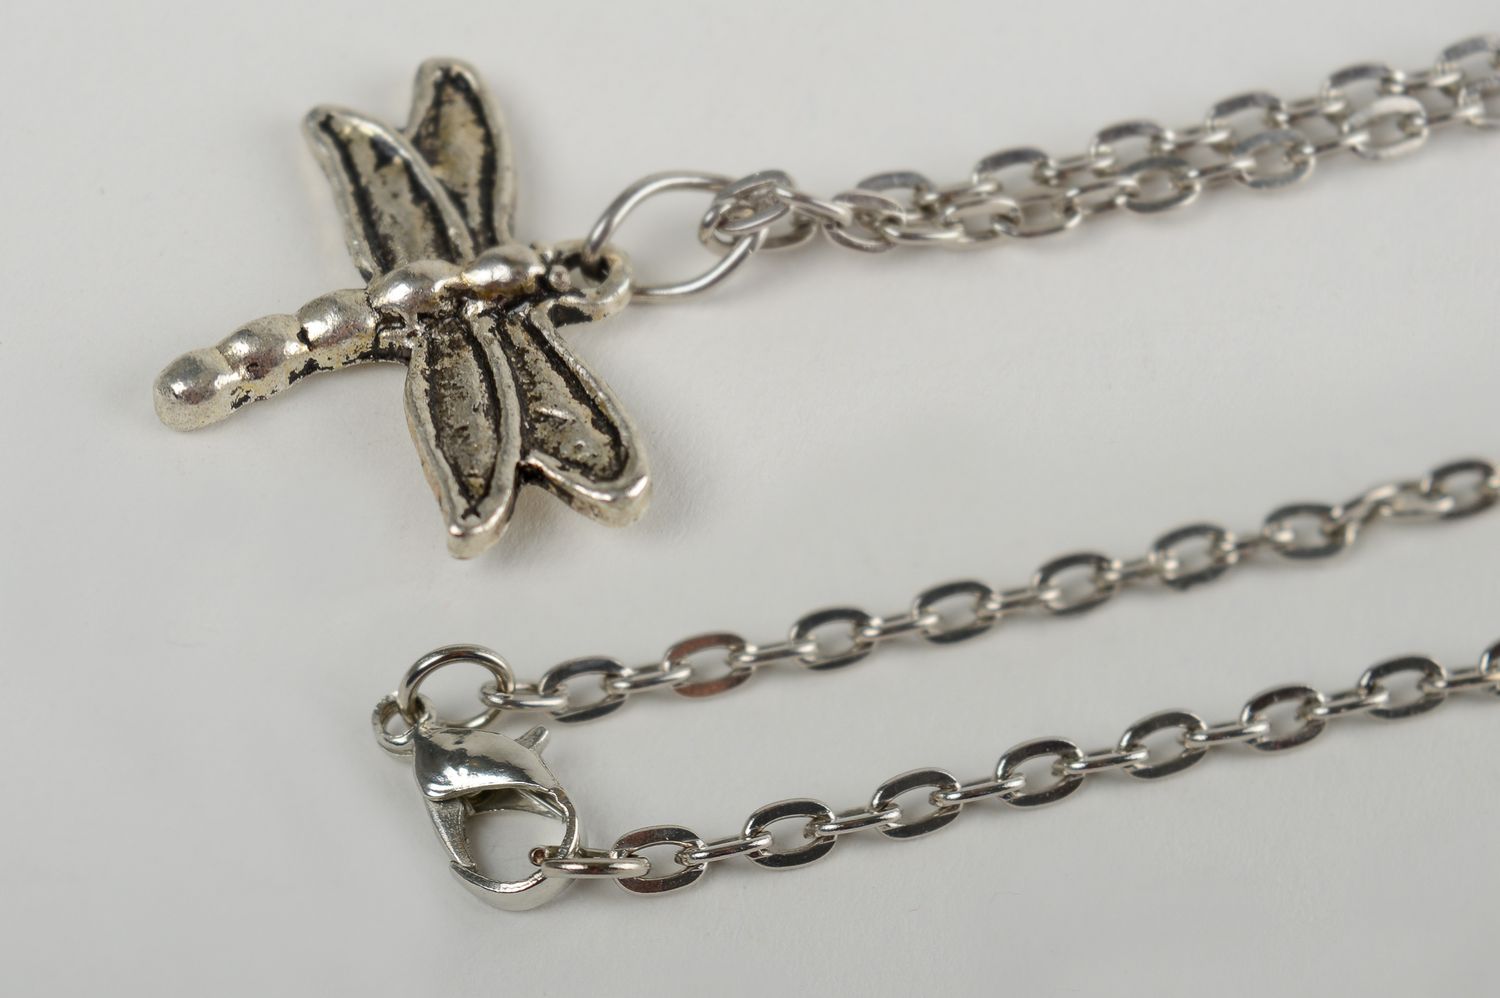 Handmade vintage pendant of chain metal pendant stylish accessories for women photo 3